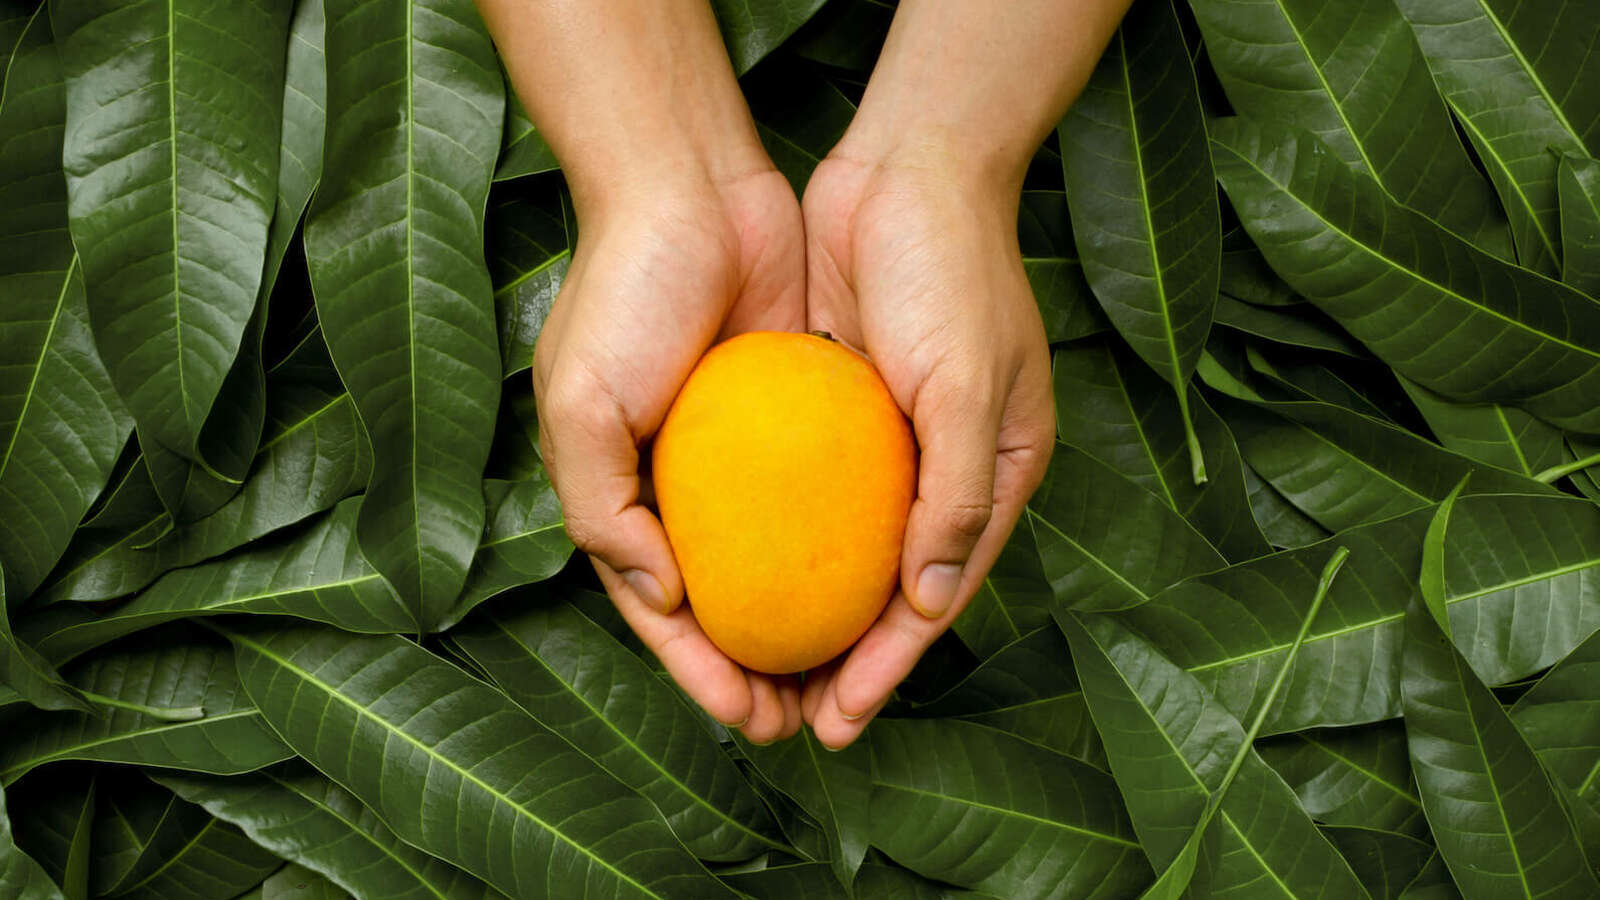 We turn Australian grown
fresh organic mangoes
into dried mango goodness.